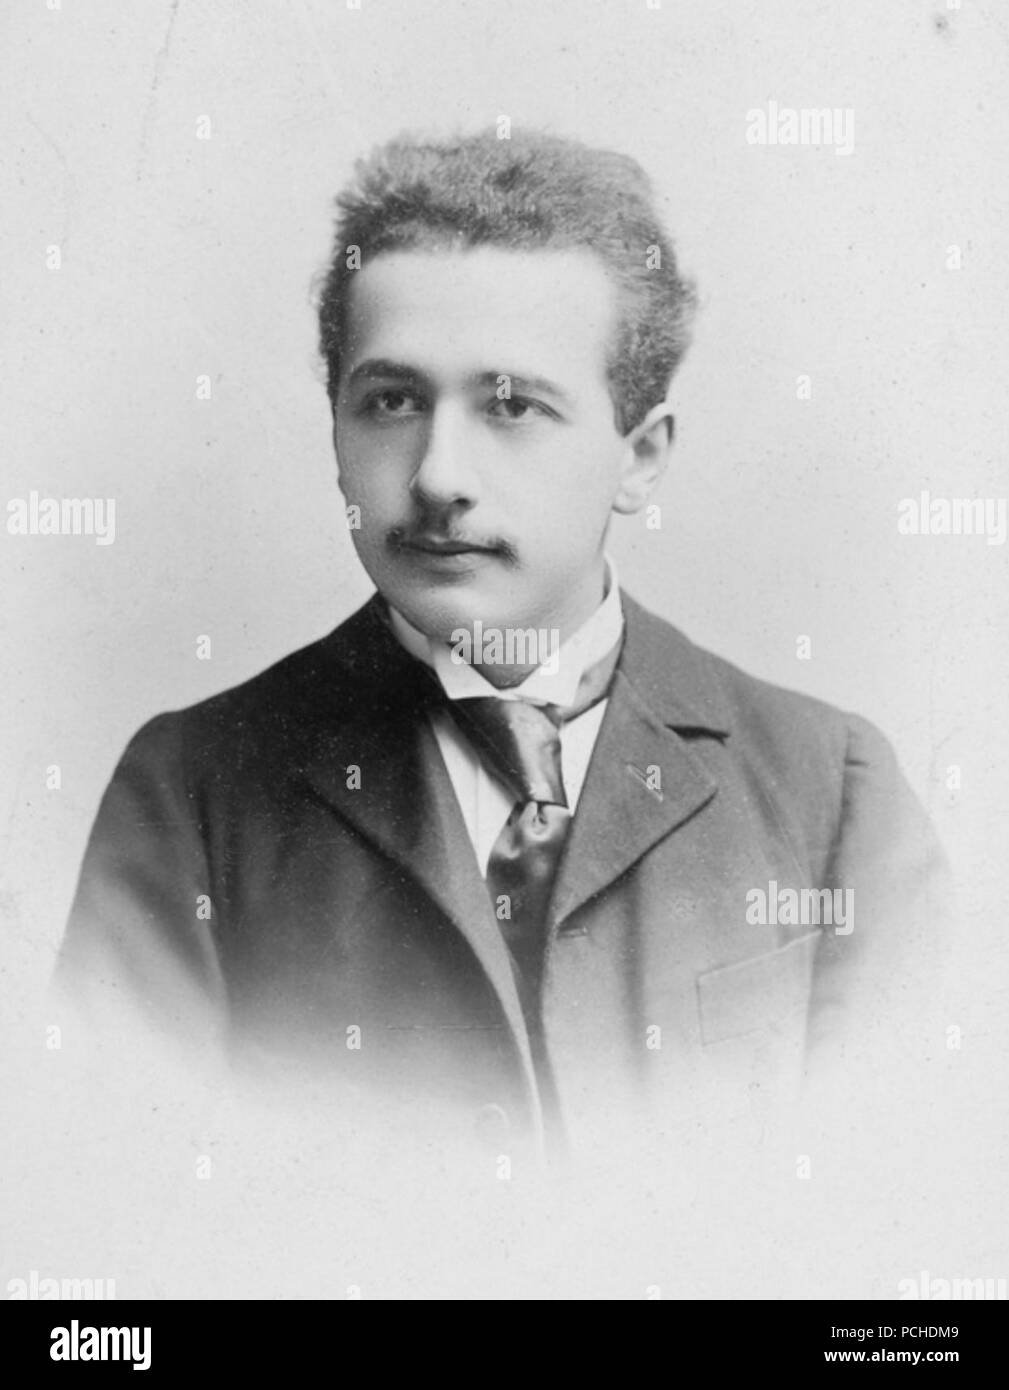 Albert Einstein c1890s. Stock Photo